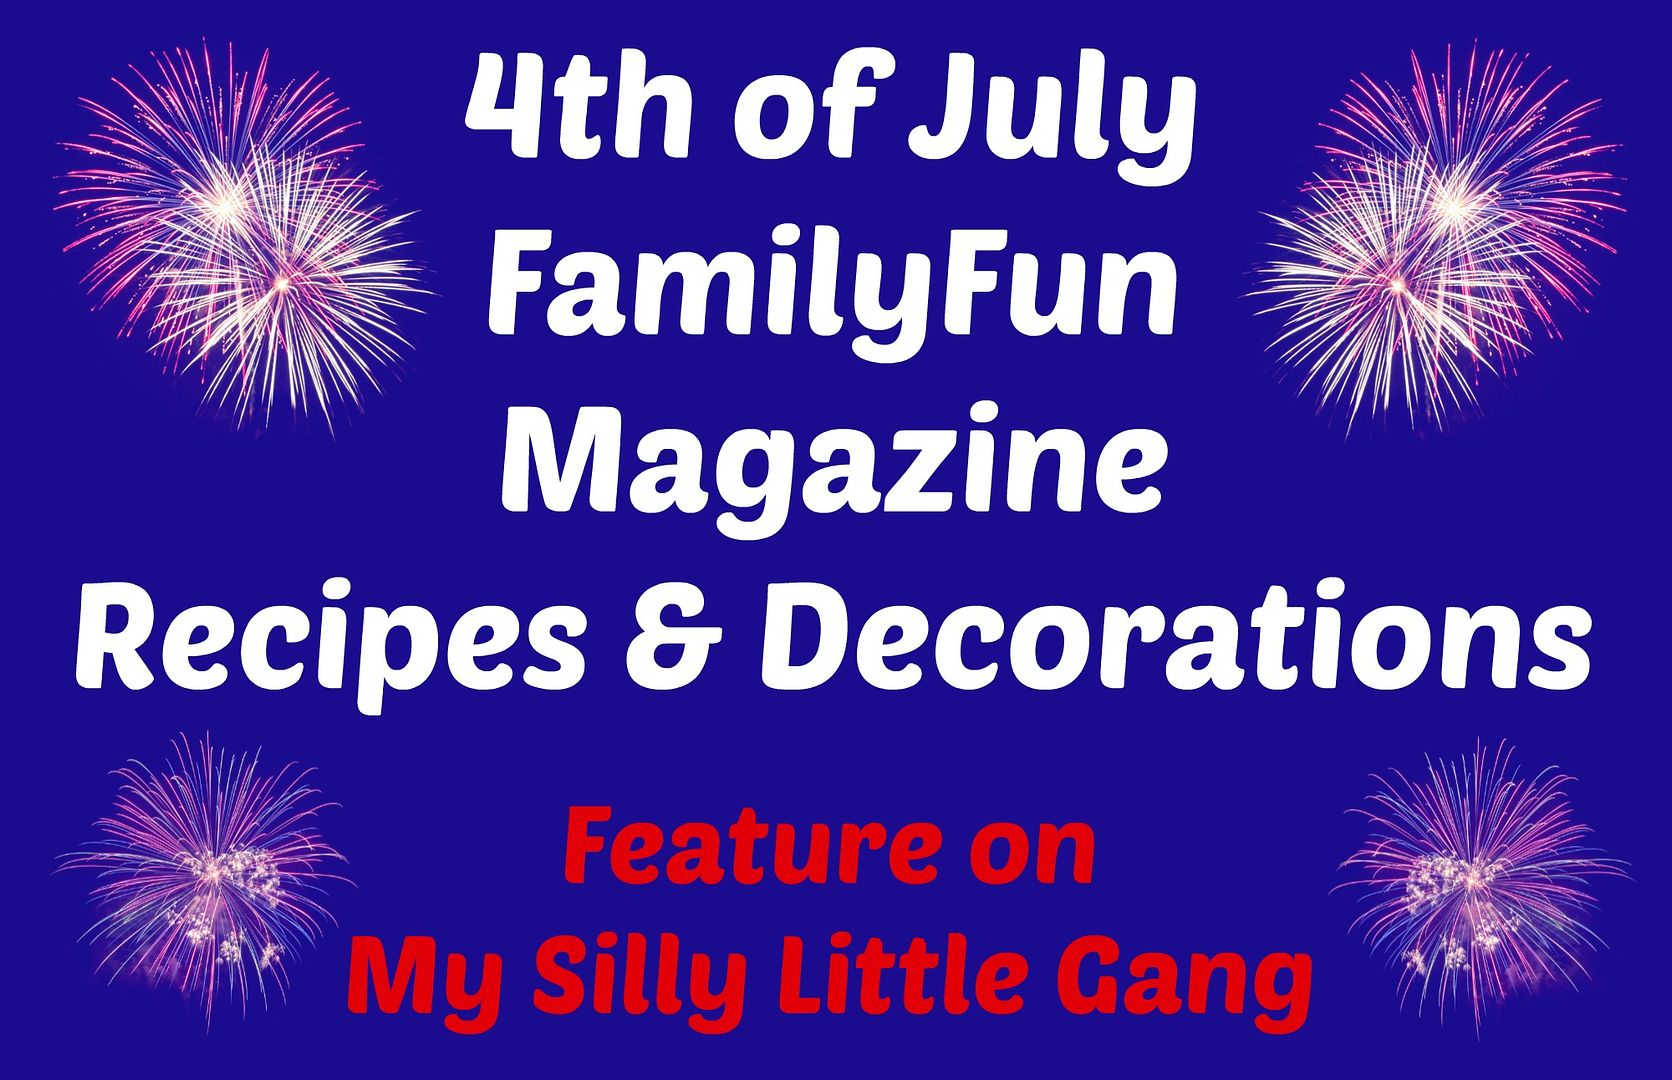 4th of July FamilyFun Recipes & Decorations